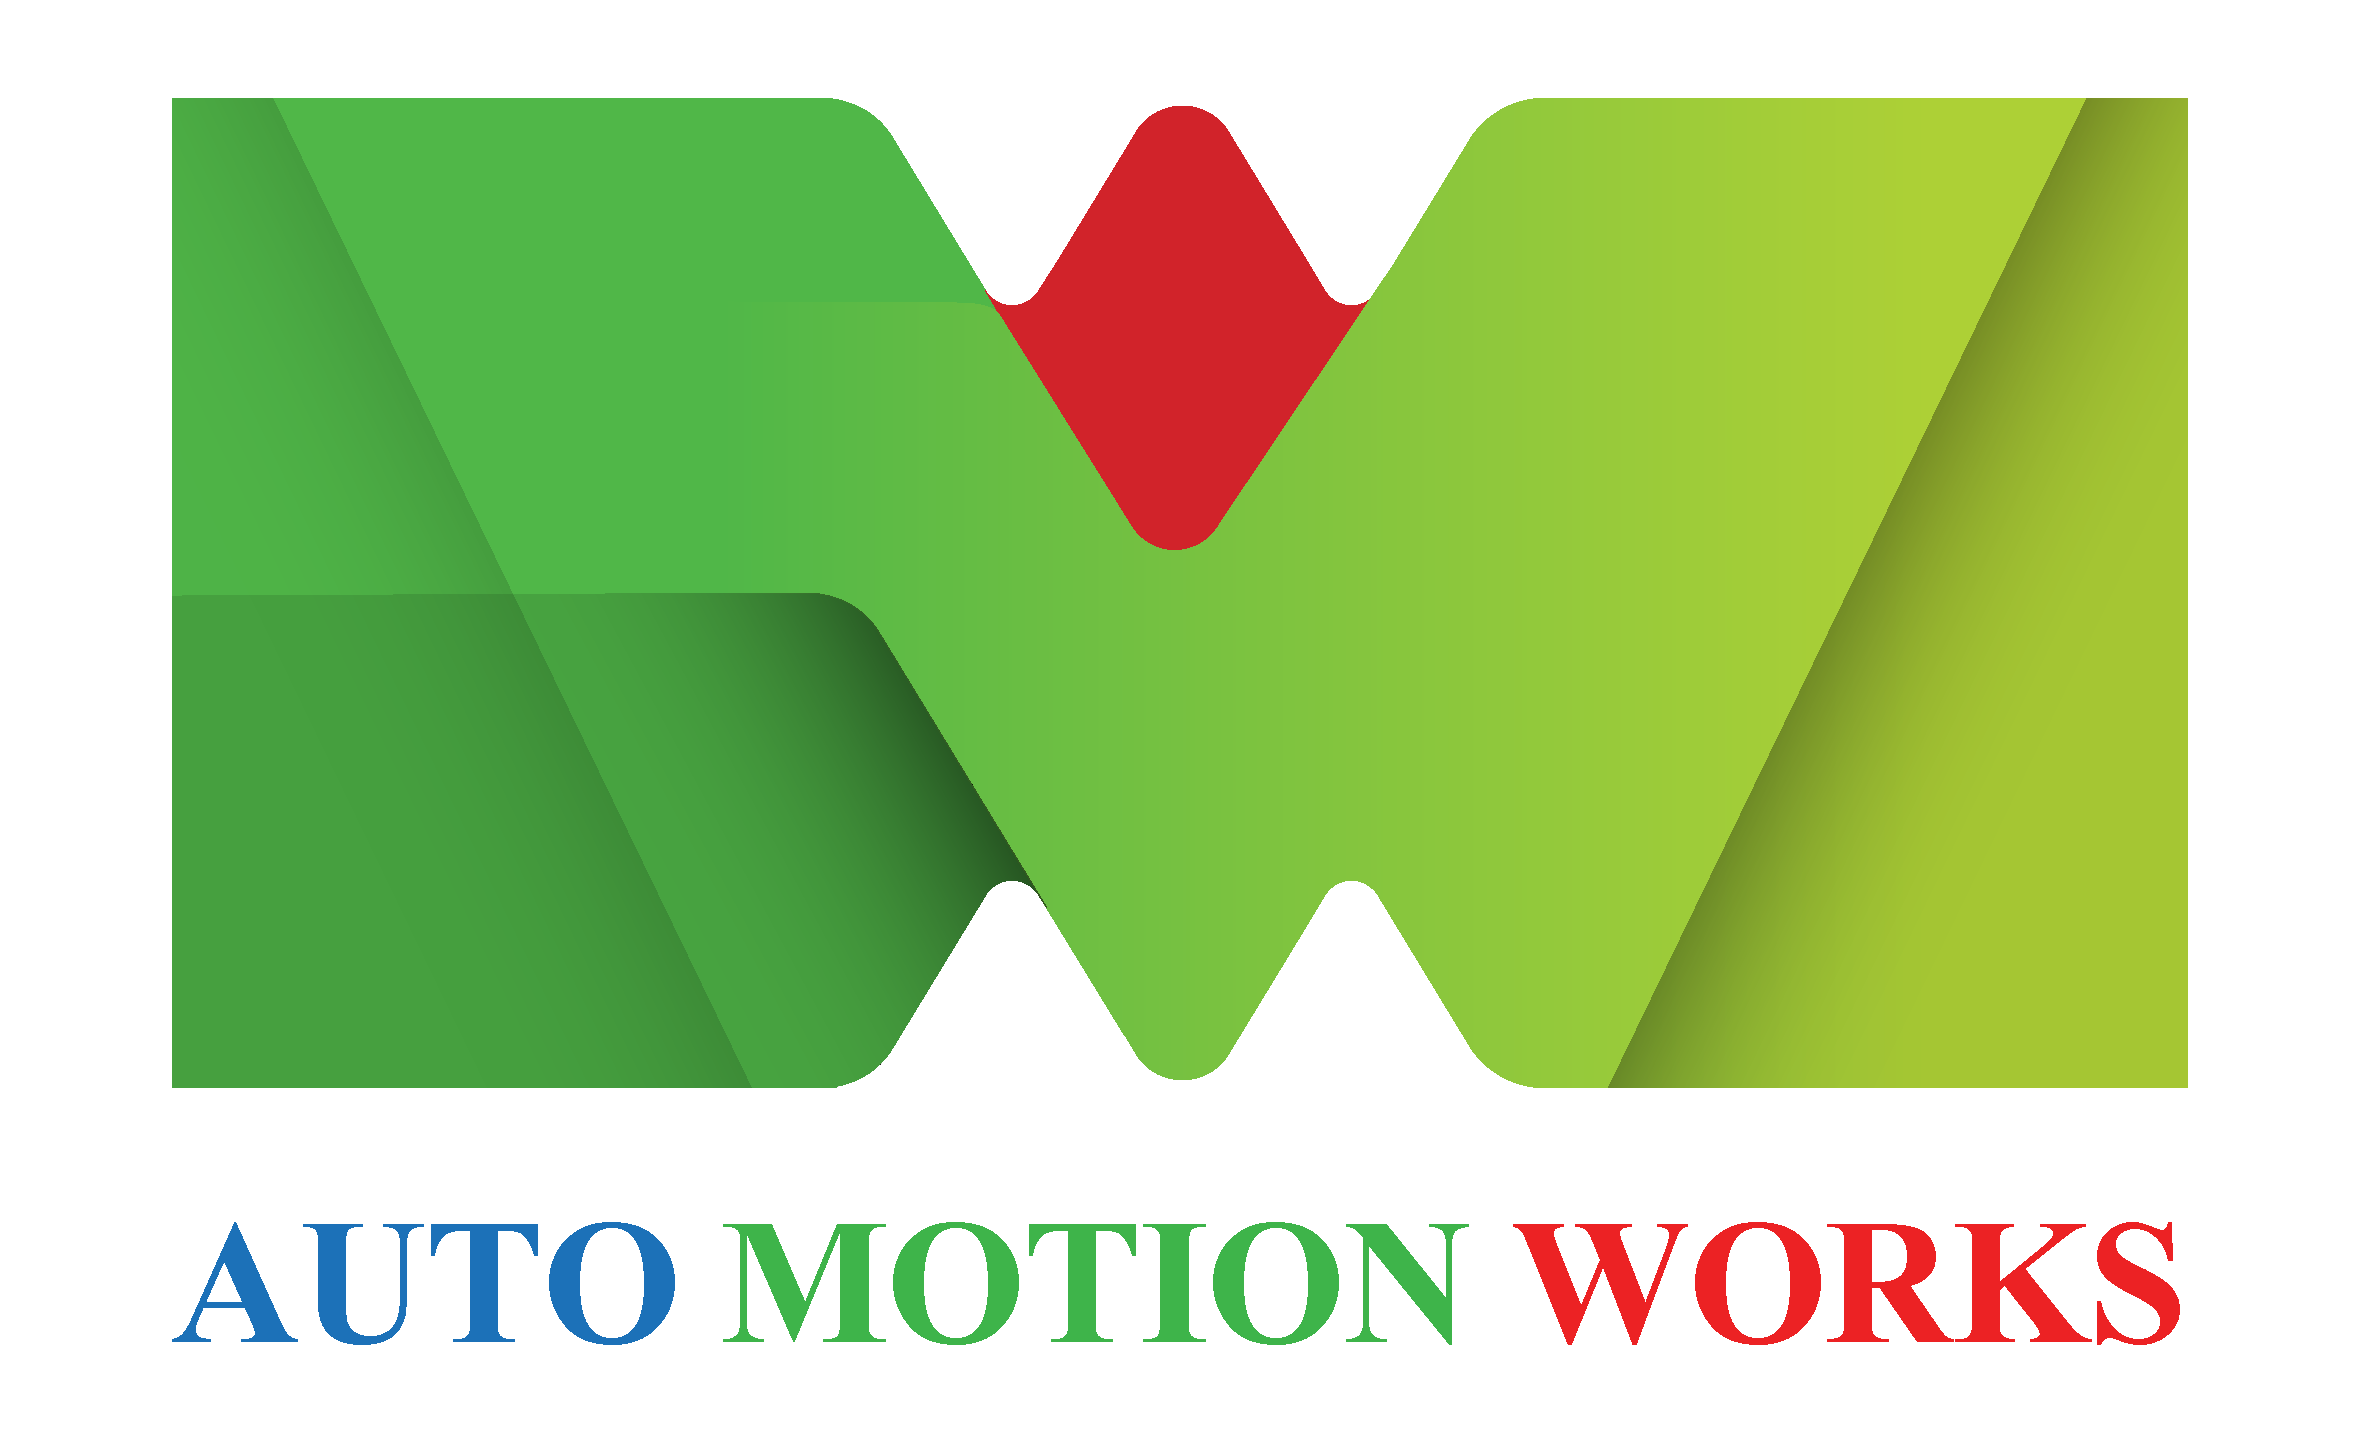 AutomotionWorks Co., Ltd.